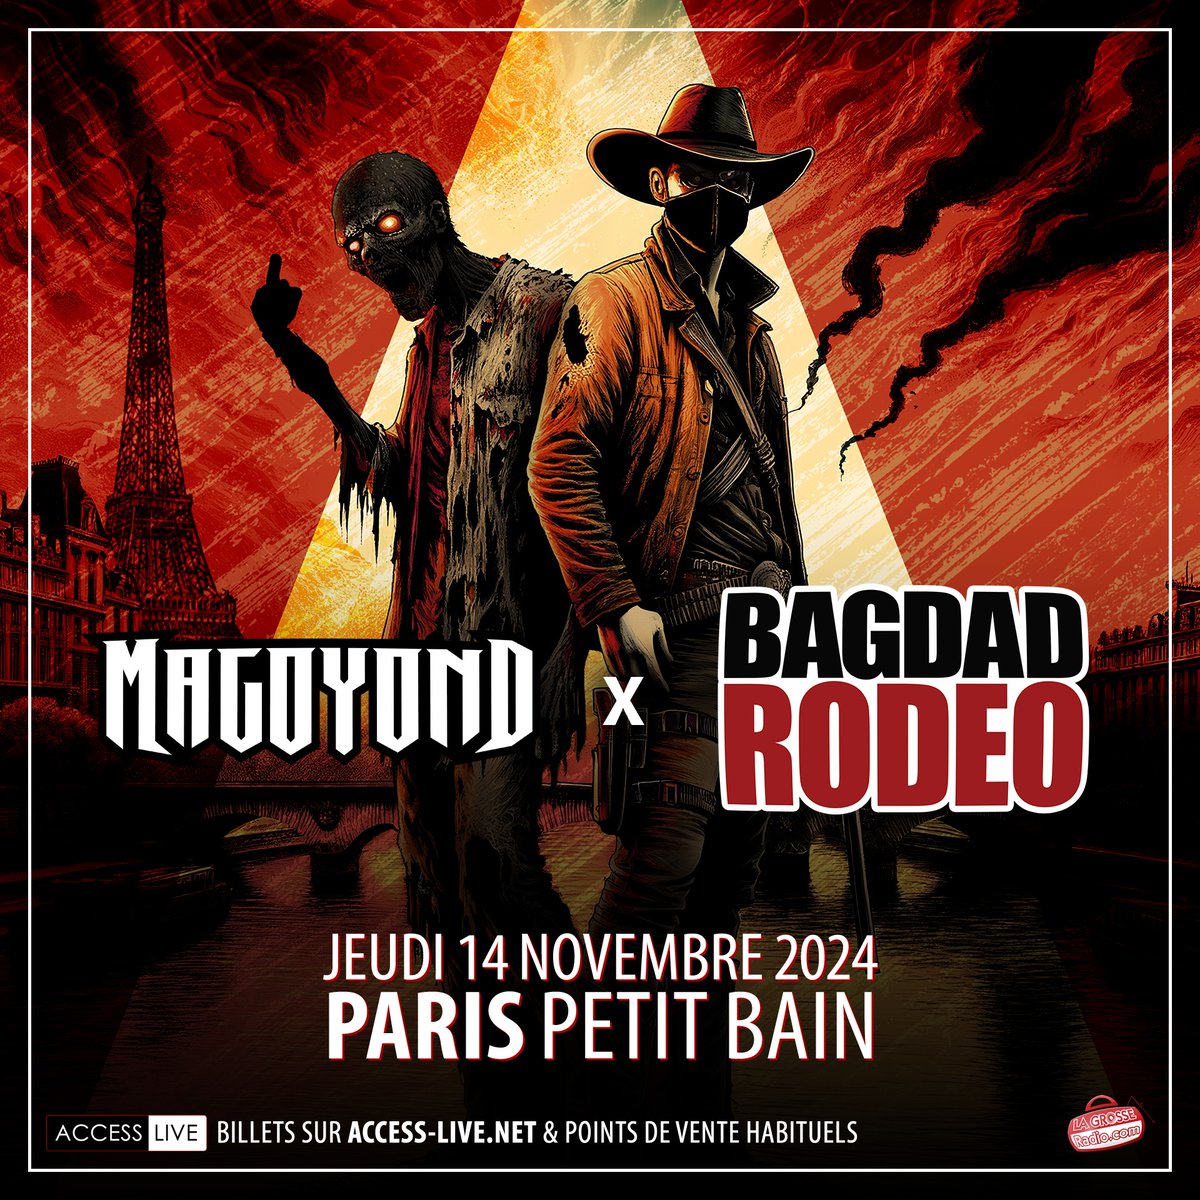 Bagdad Rodeo - Magoyond en Petit Bain Tickets